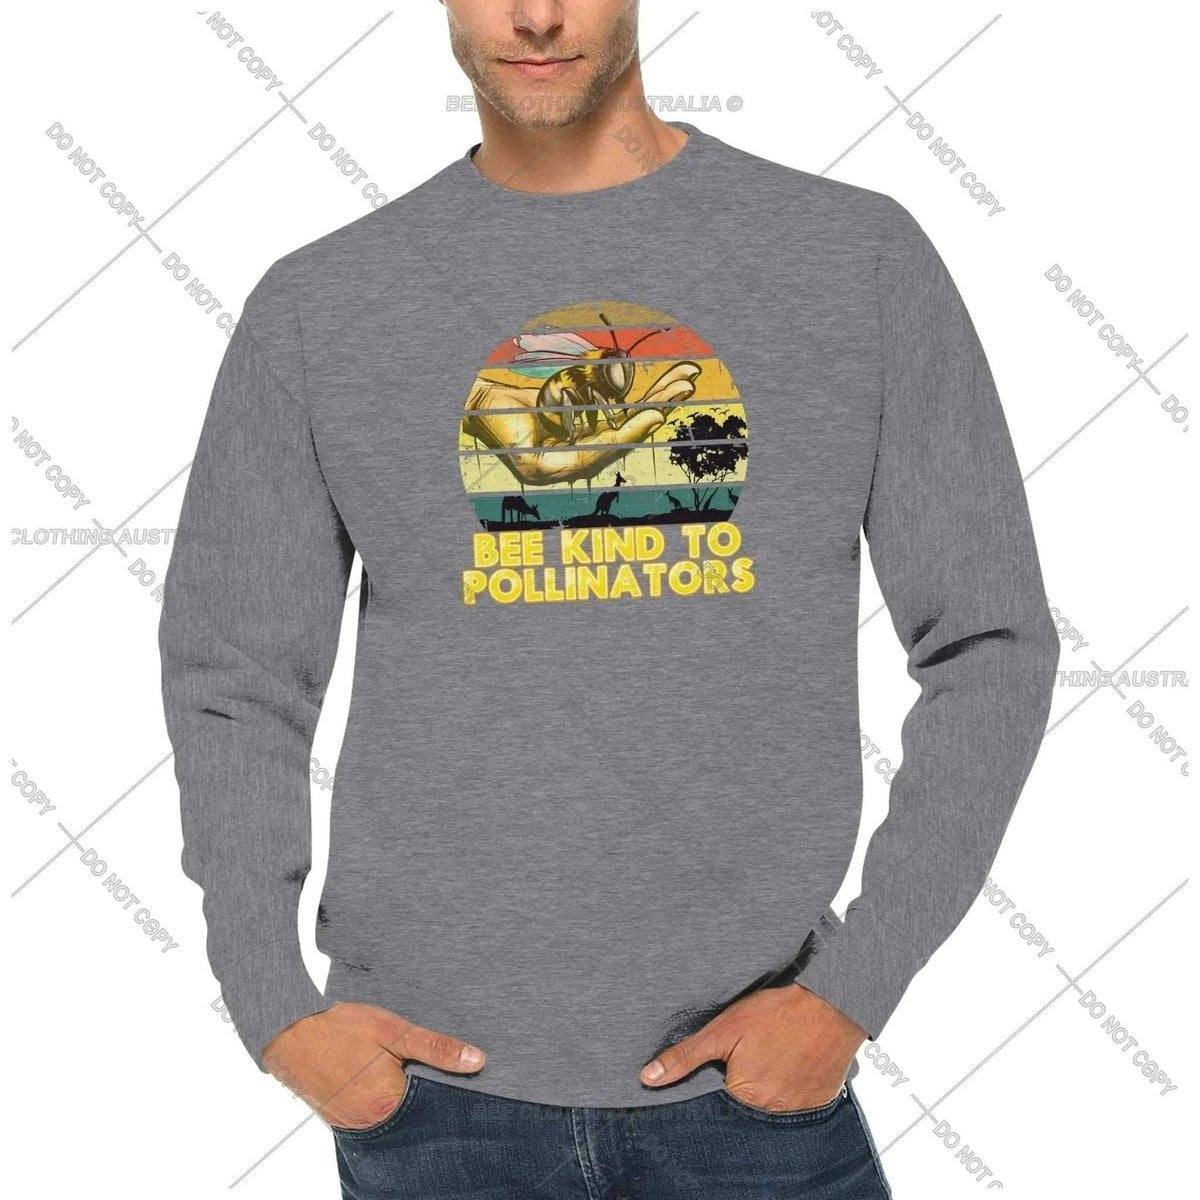 Bee Kind To Pollinators Jumper - Retro Vintage Sunset - Premium Unisex Crewneck Sweatshirt Australia Online Color Heather Gray / S